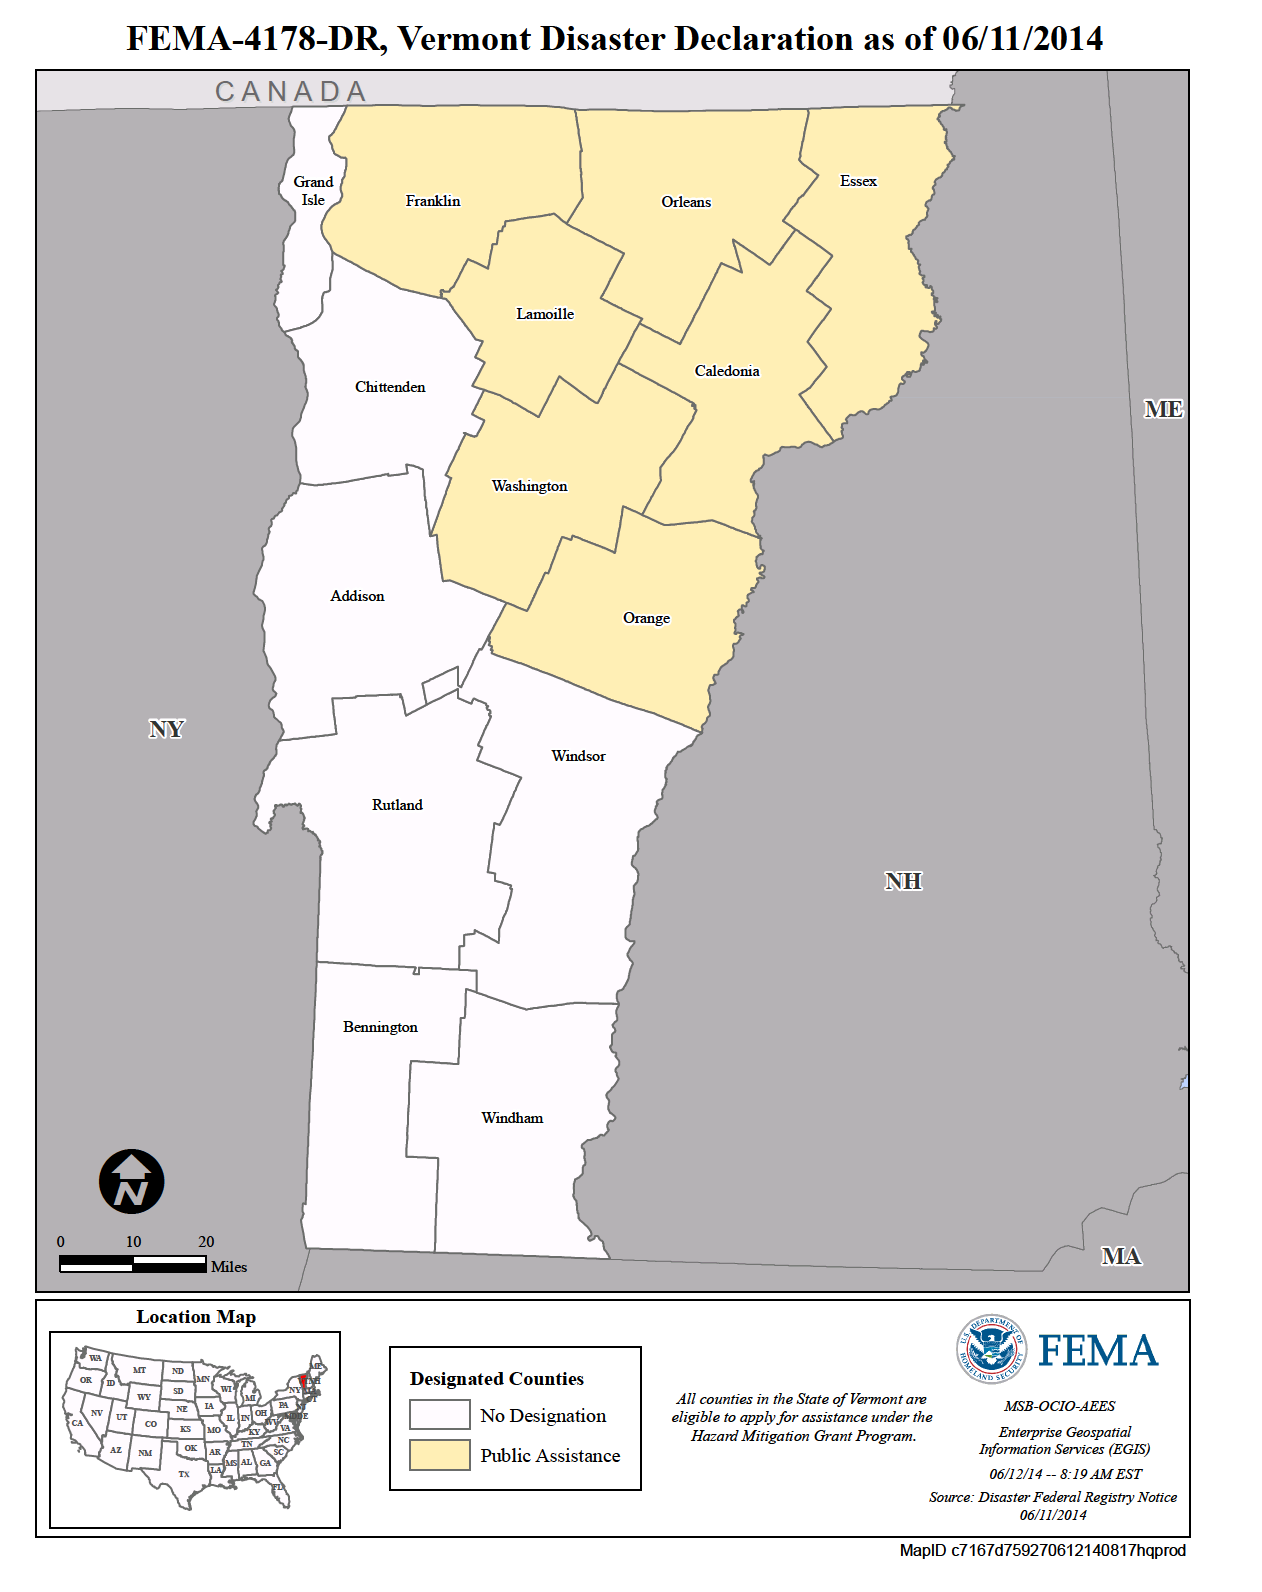 Vermont Severe Storms and Flooding (DR4178) FEMA.gov